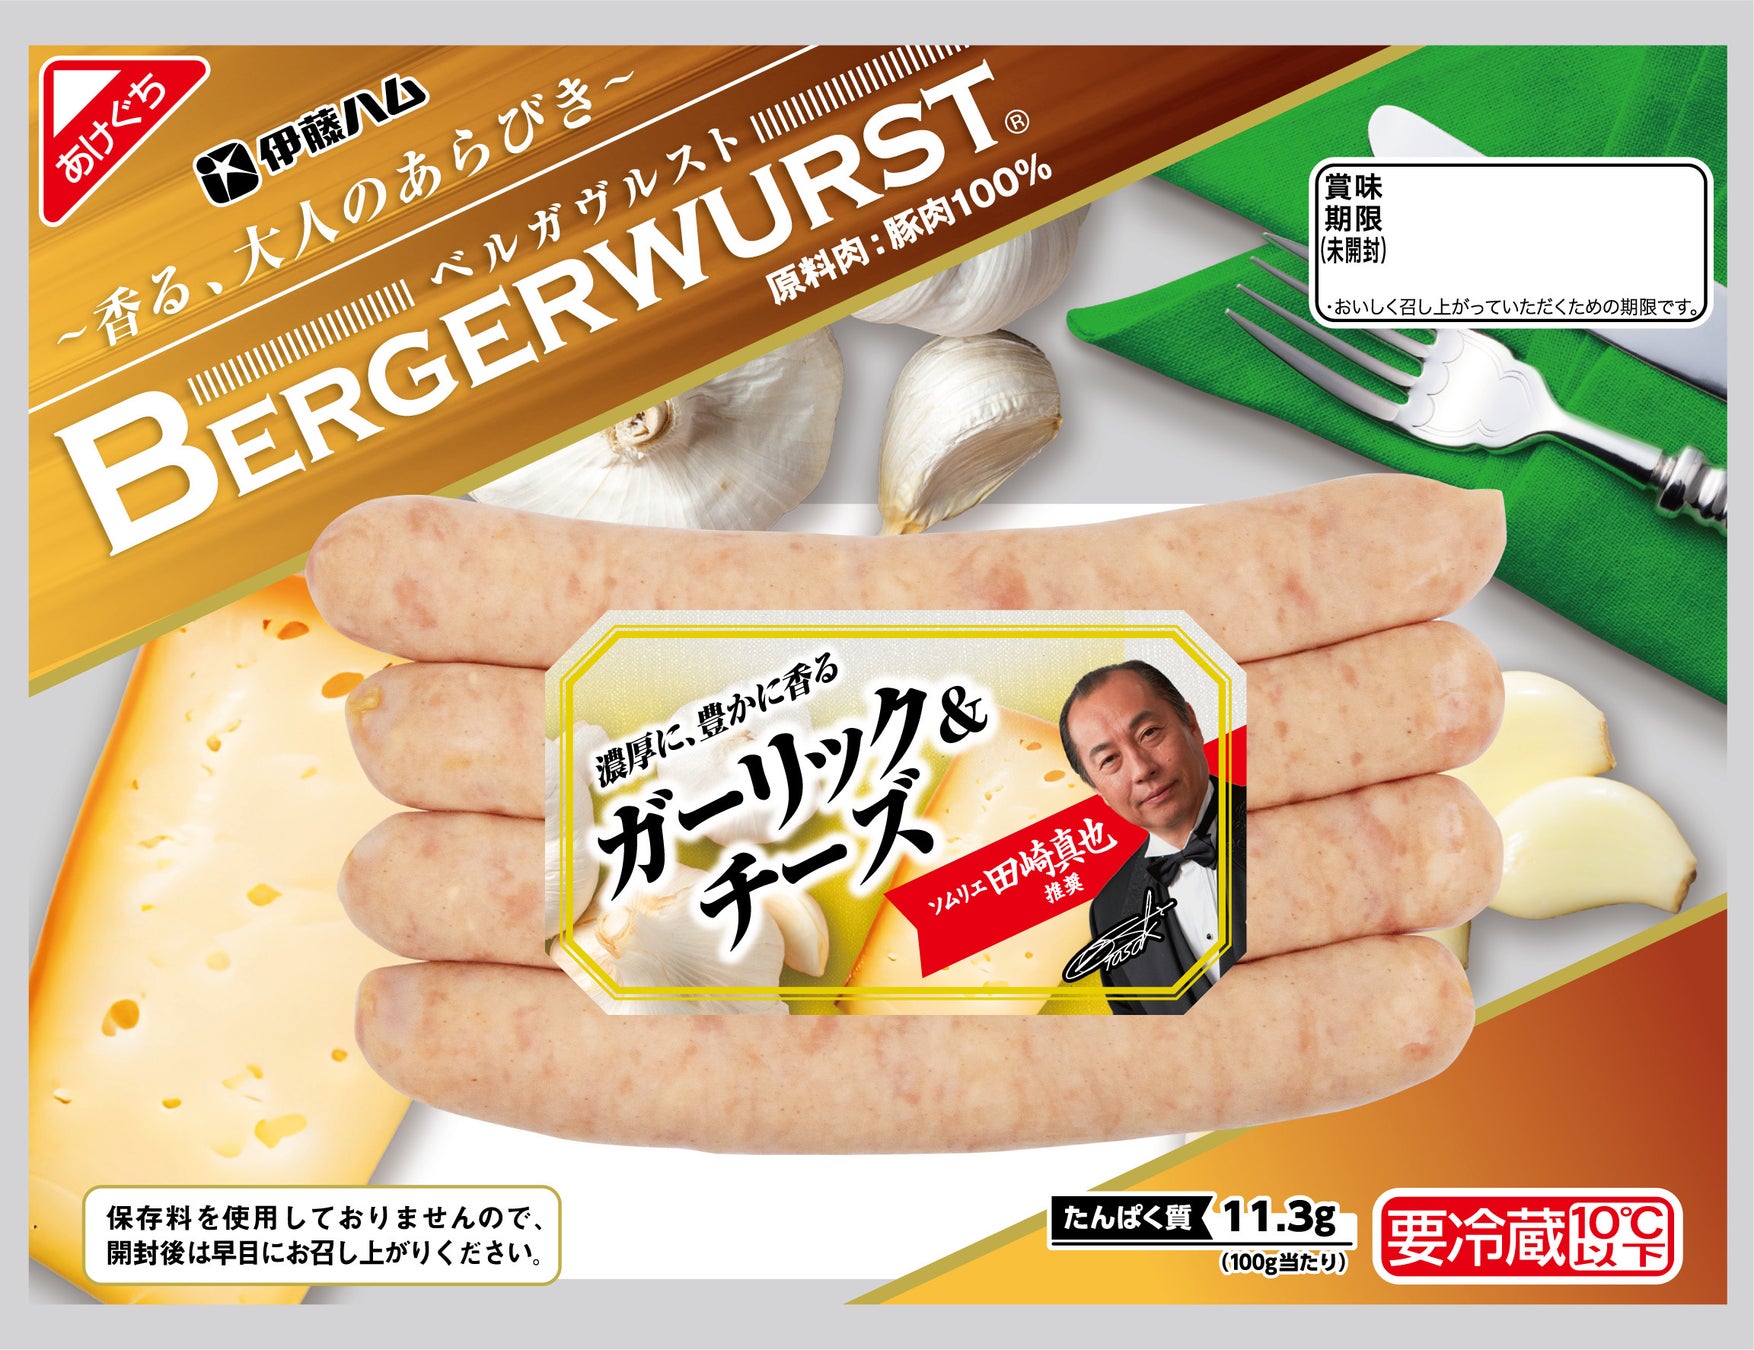 「BERGERWURST(R)（ベルガヴルスト）ガーリック＆チーズ」を新発売